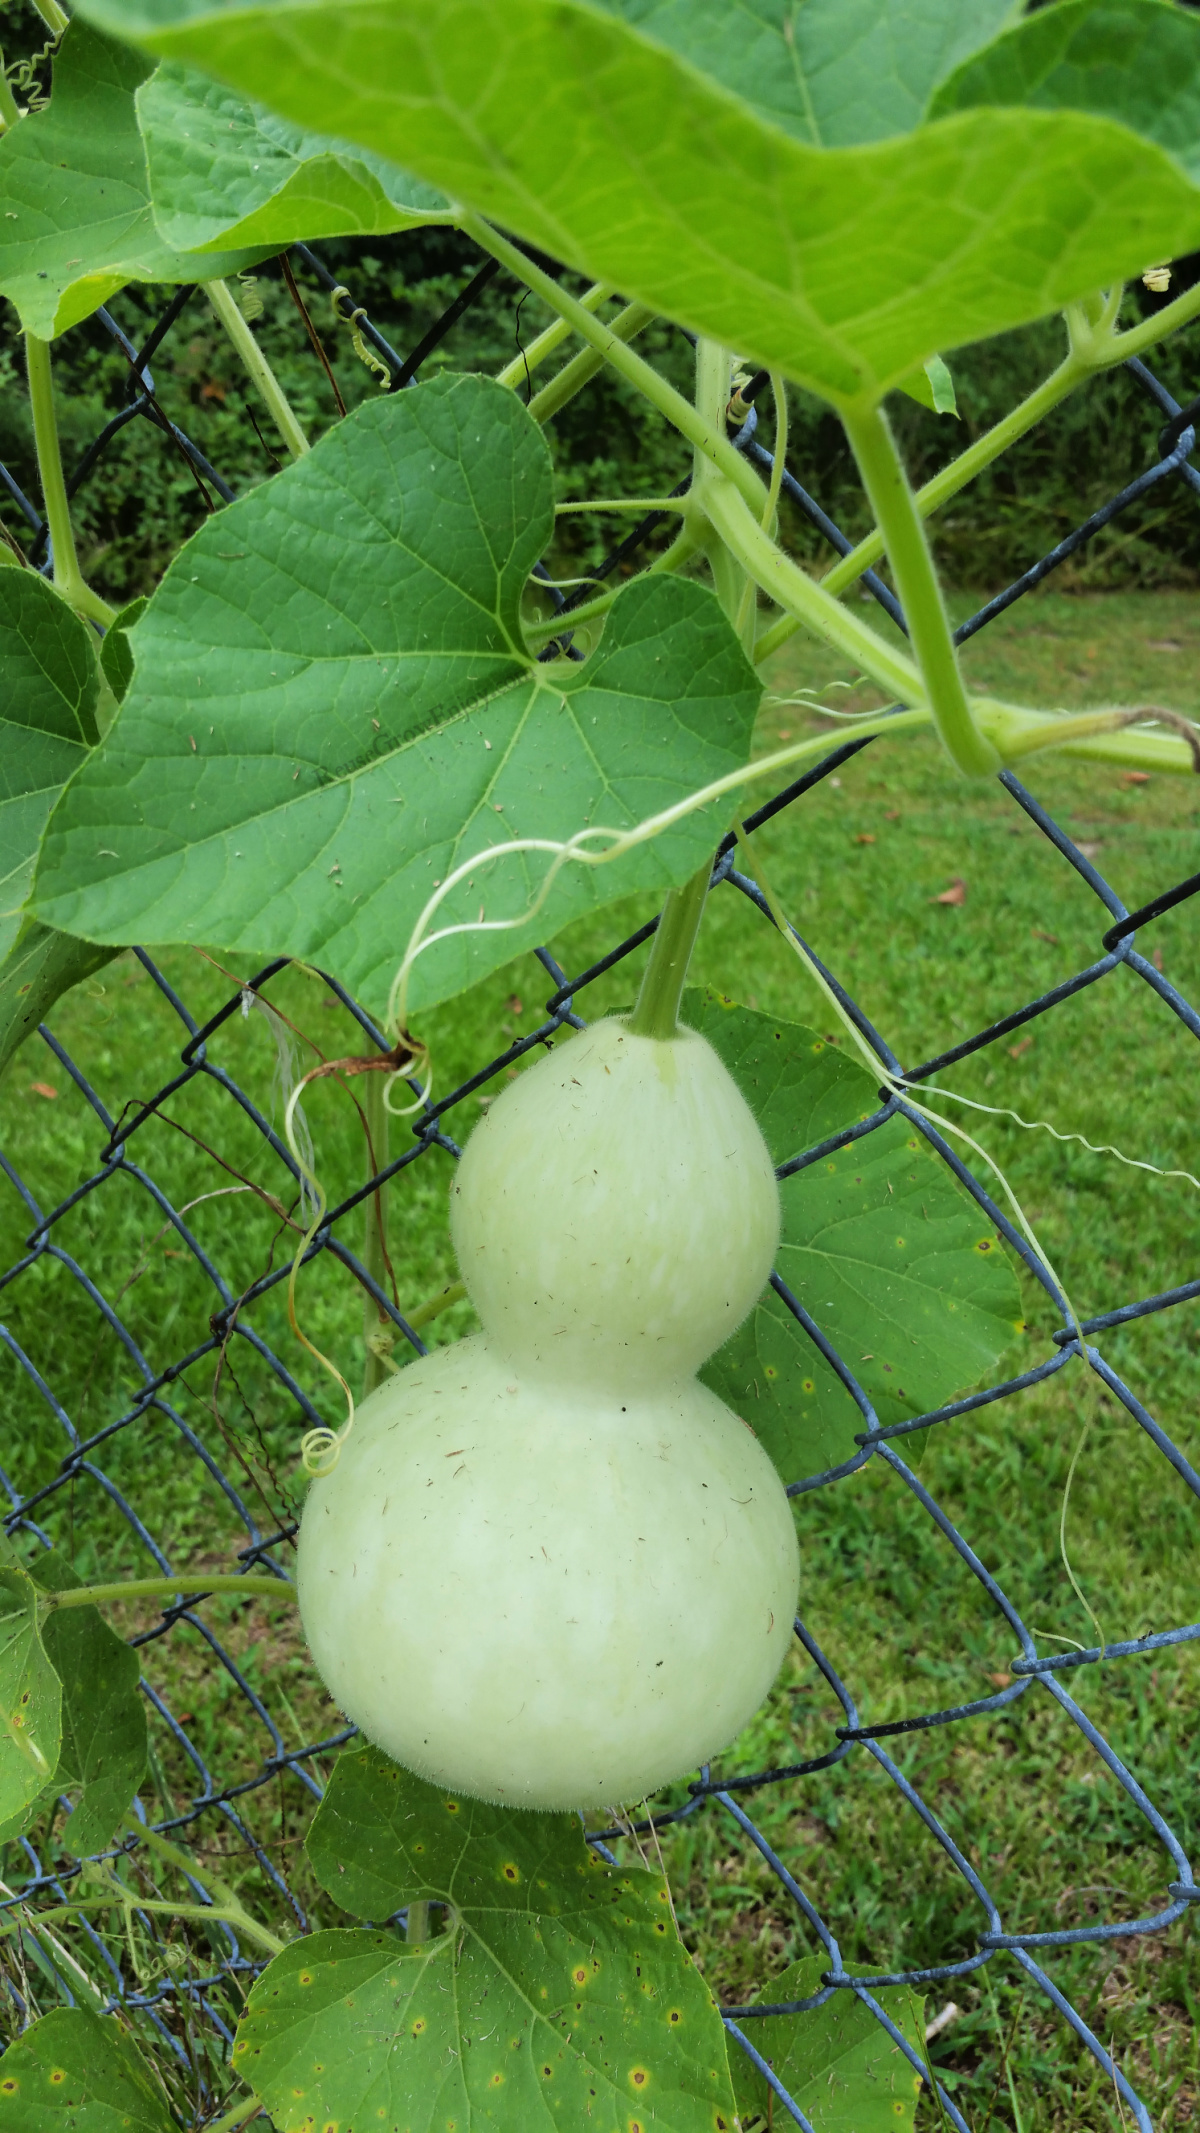 Birdhouse gourd growing on a vine